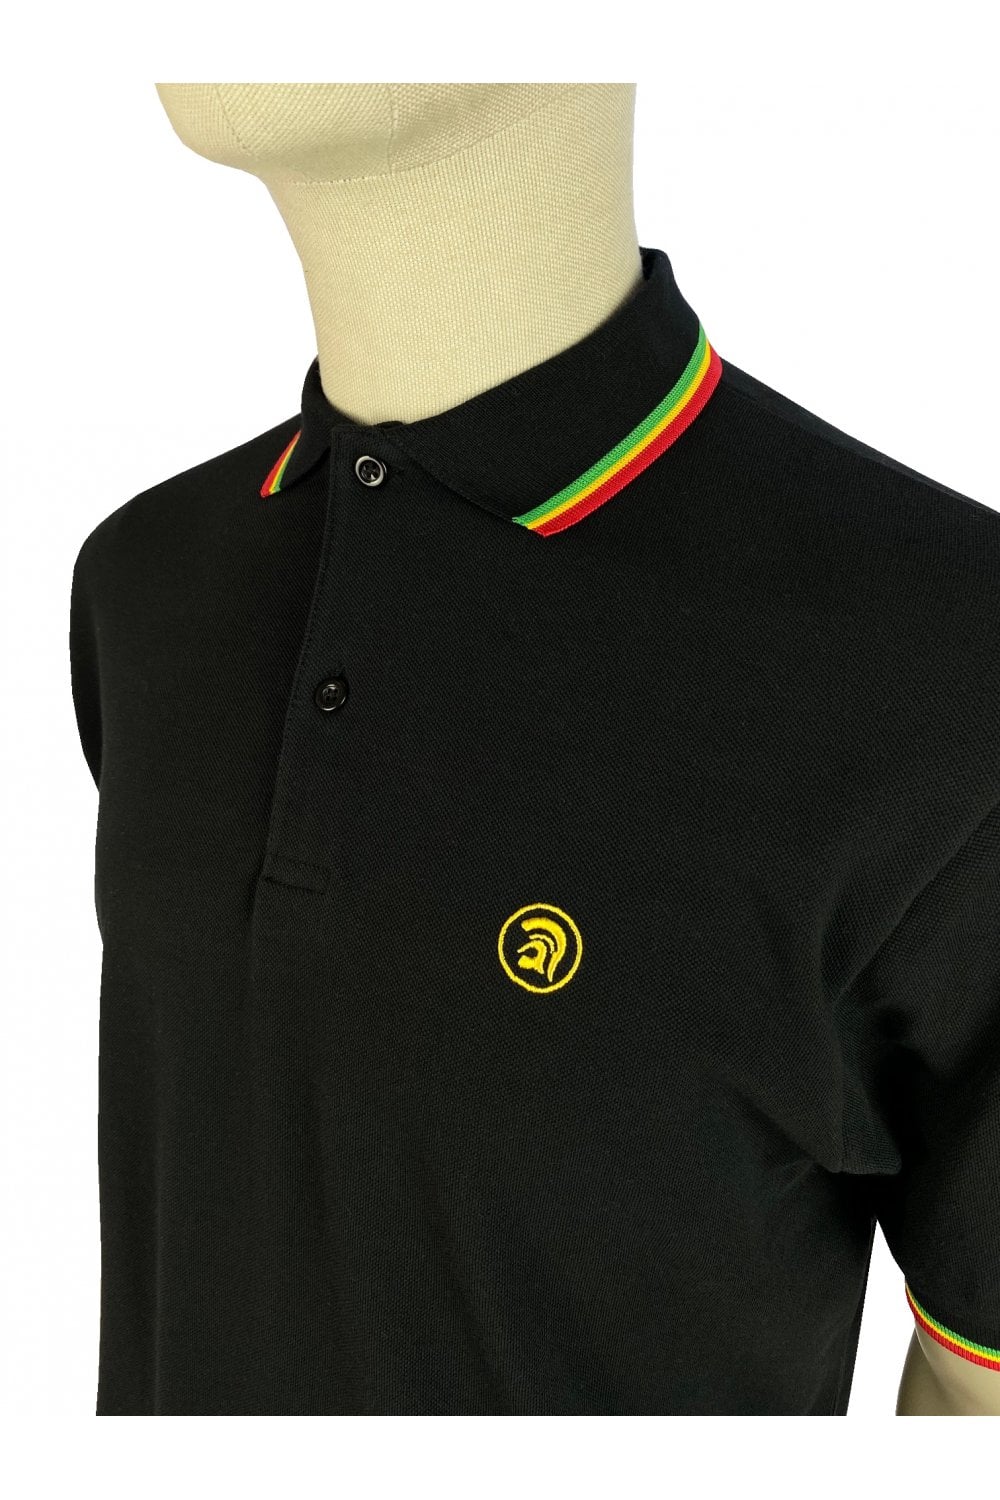 Trojan Records Men's TC1031 Twin Tipped Pique Polo Shirt Rasta Black